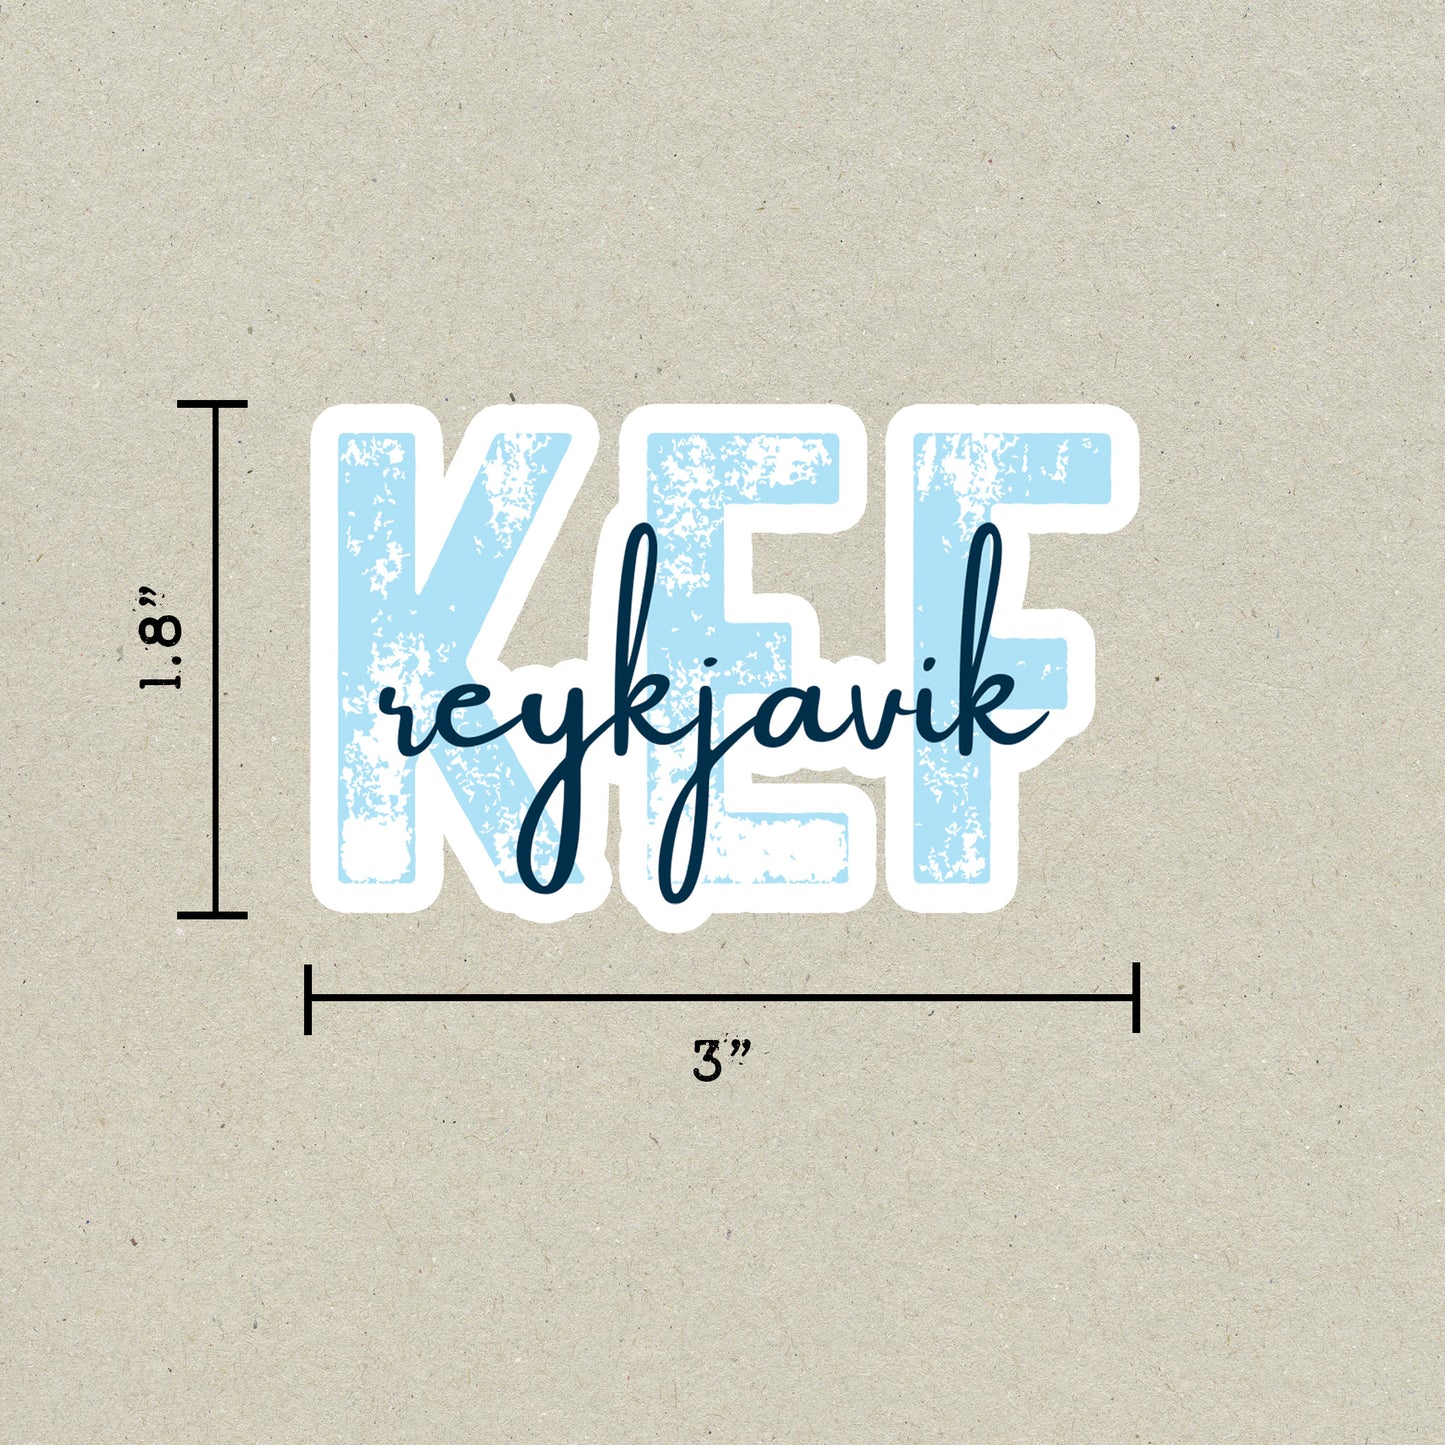 KEF Reykjavik Airport Code Sticker